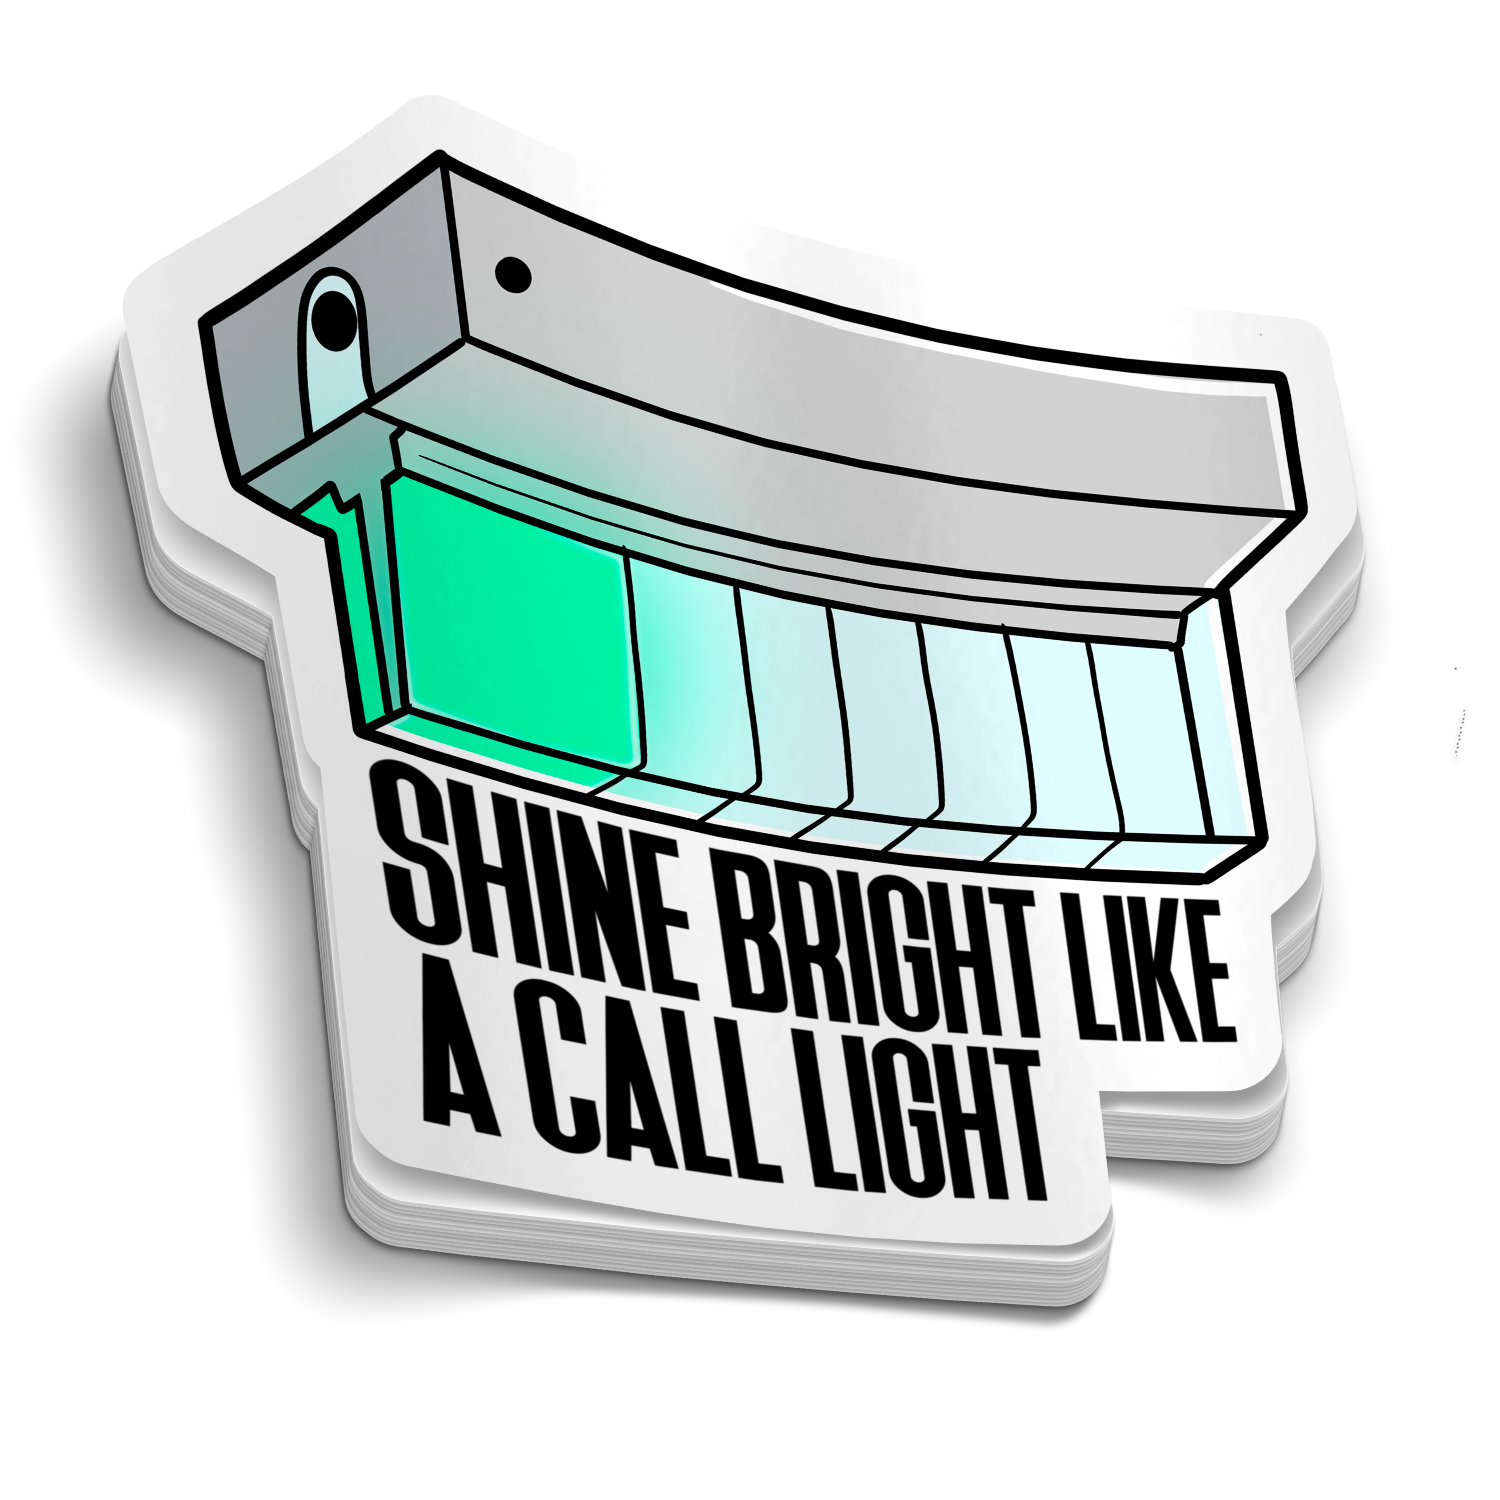 Shine Bright Like A Call Light Sticker